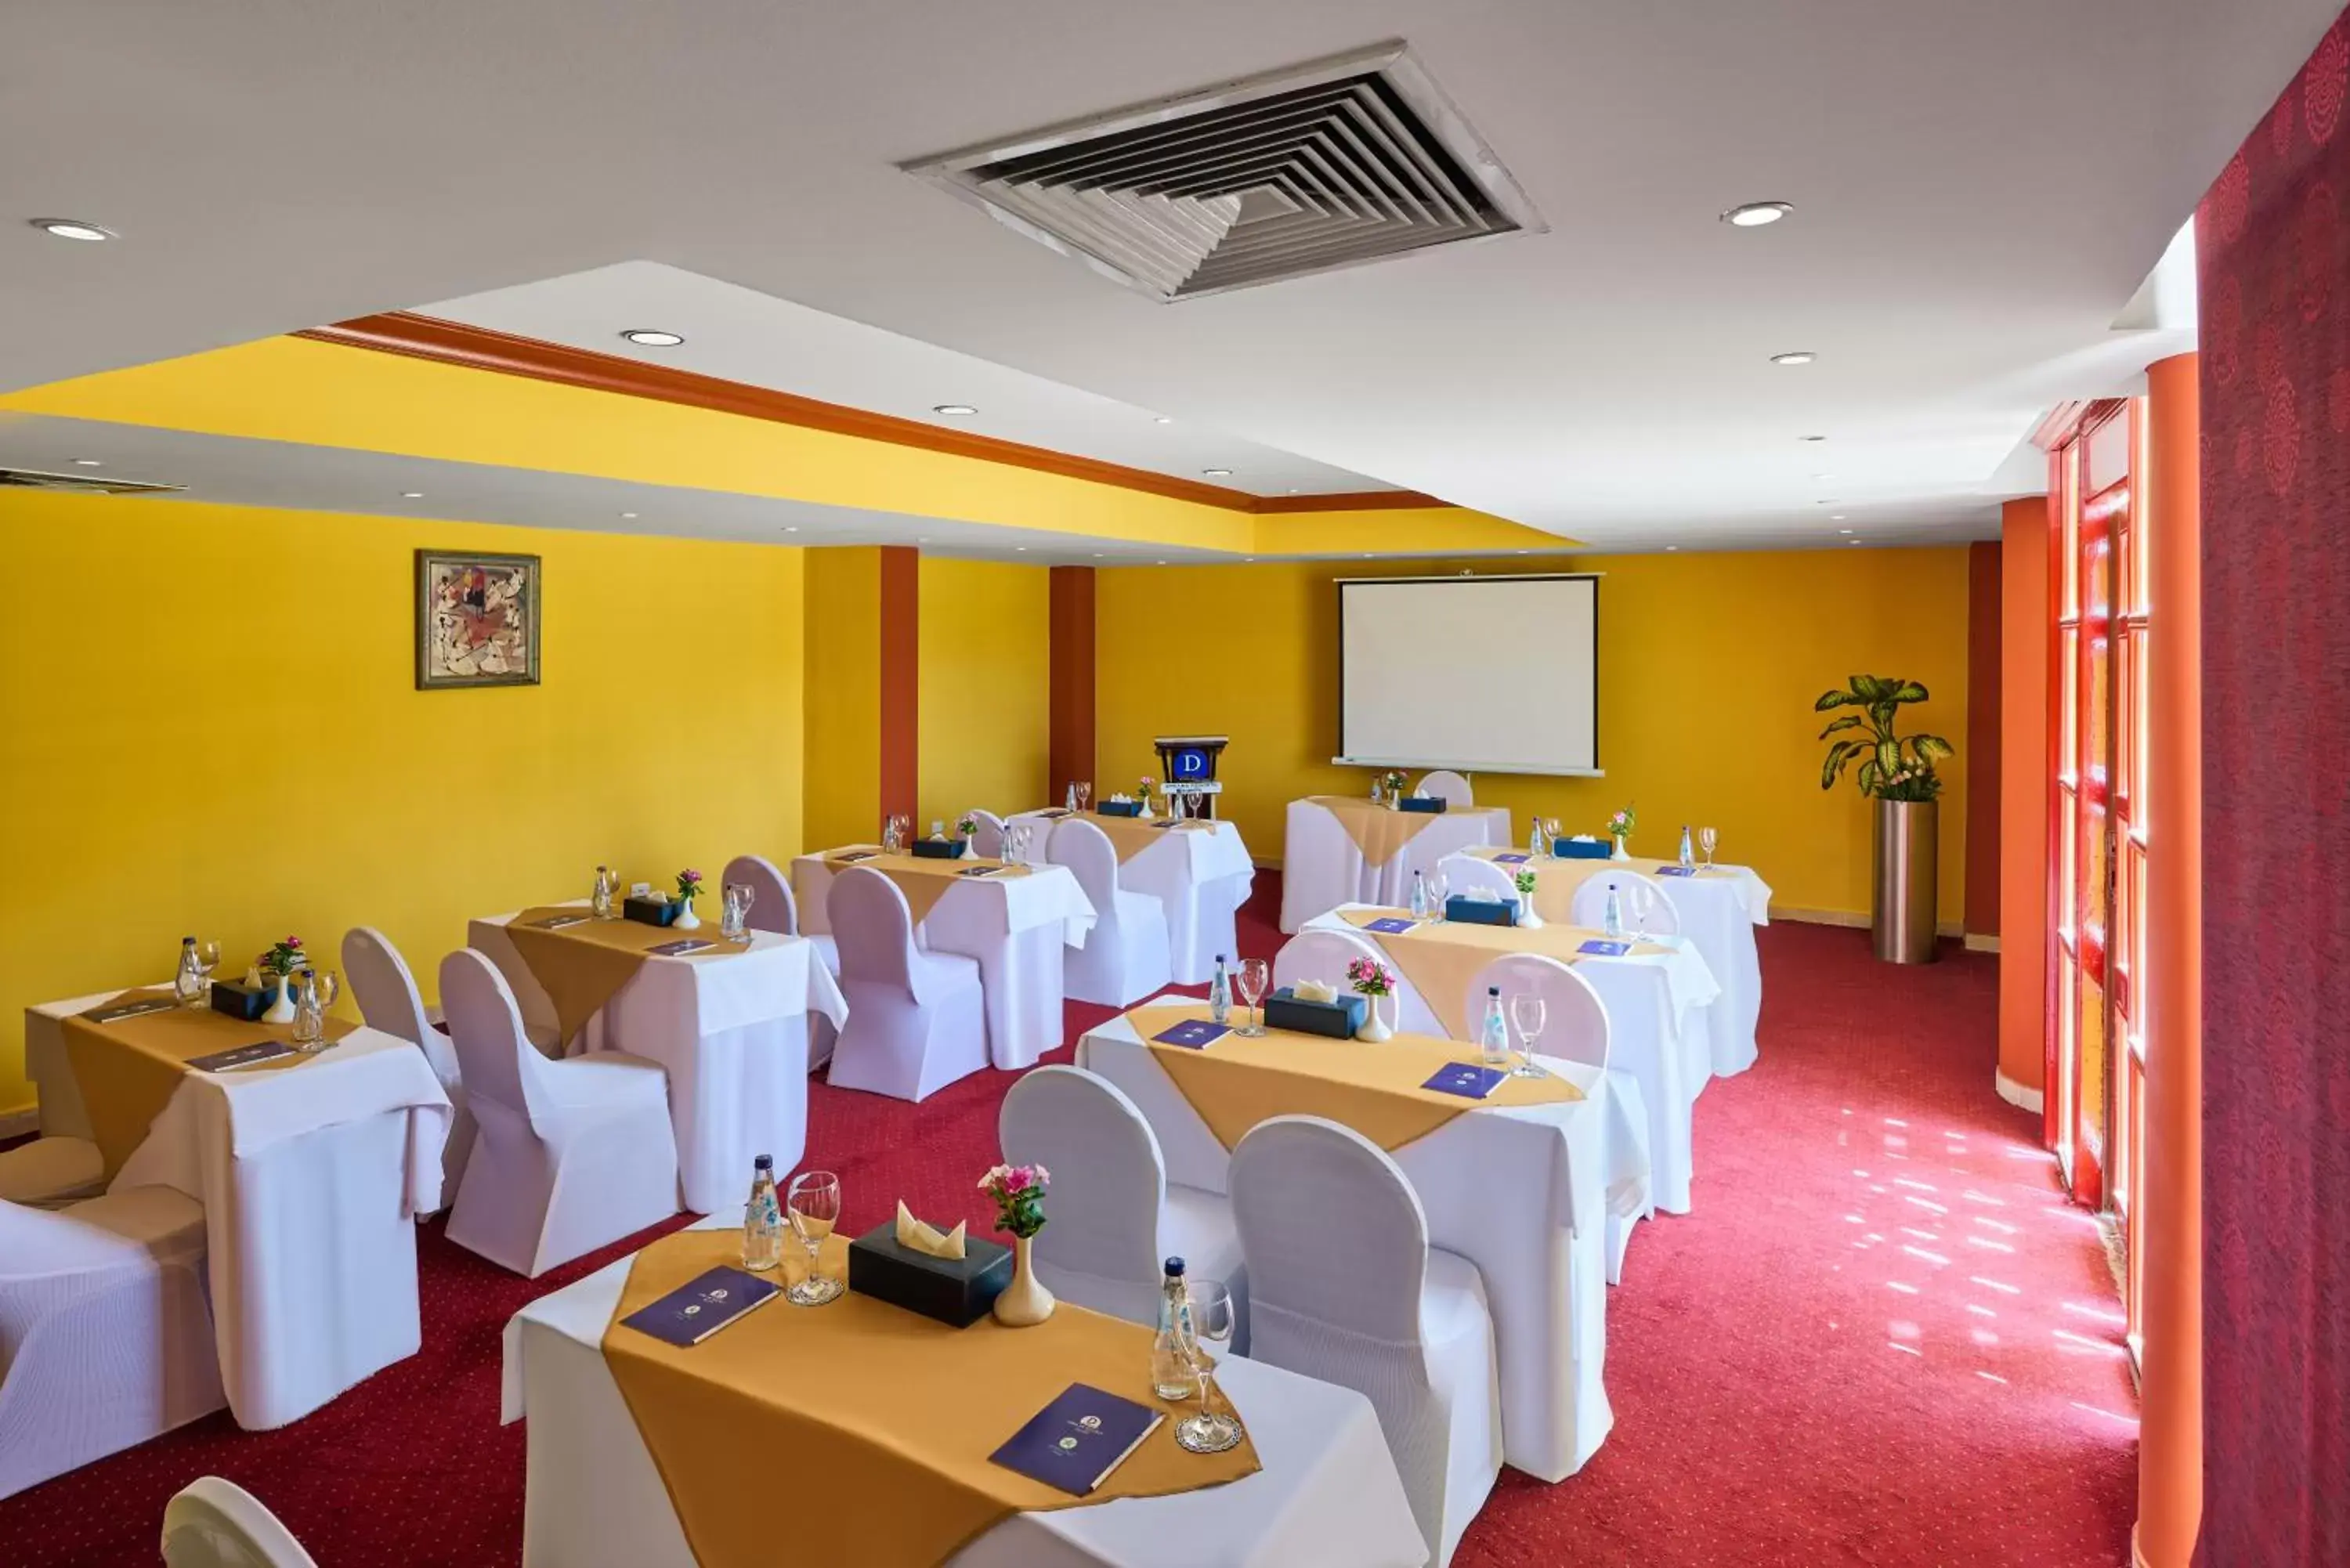 Meeting/conference room, Banquet Facilities in Dreams Vacation Resort - Sharm El Sheikh